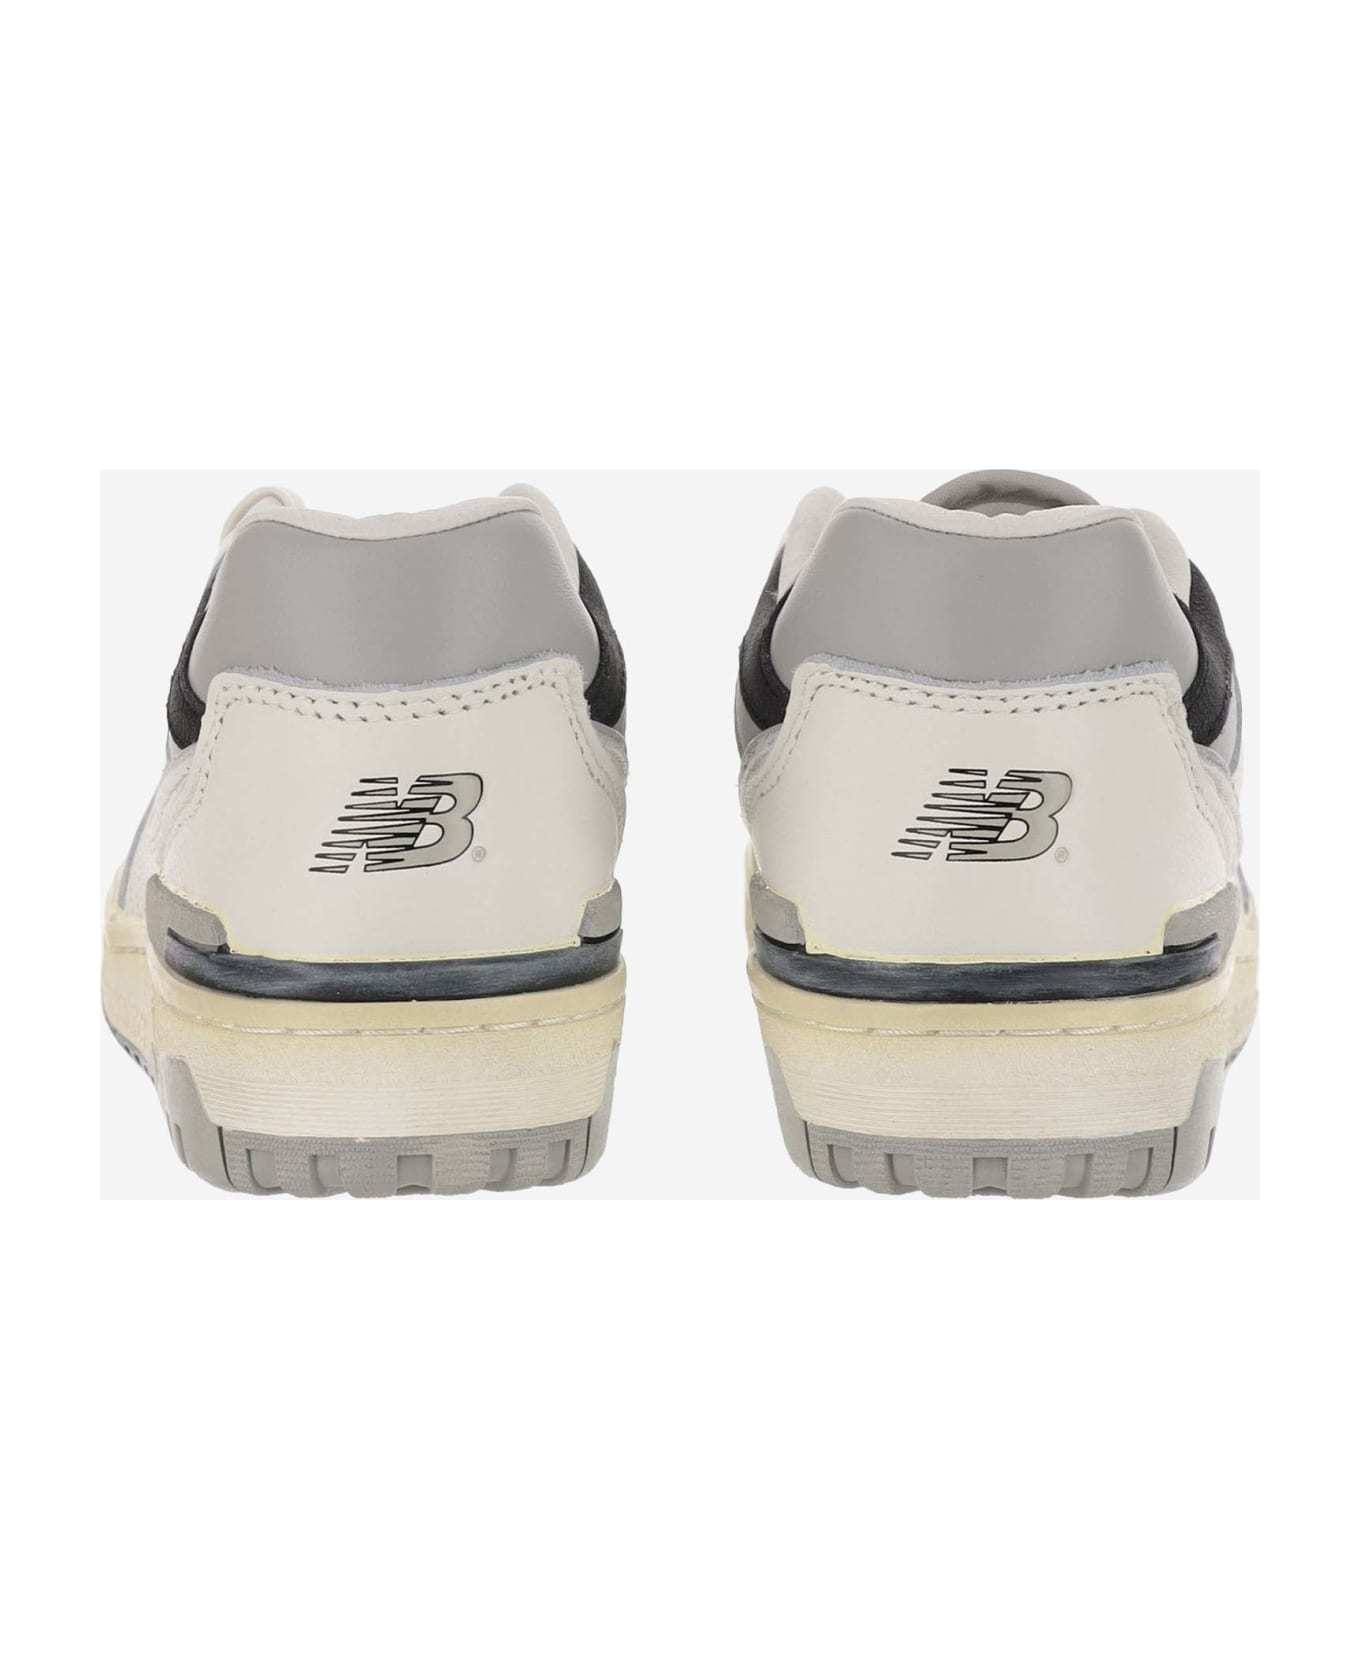 New Balance Sneakers 550 - Grey スニーカー